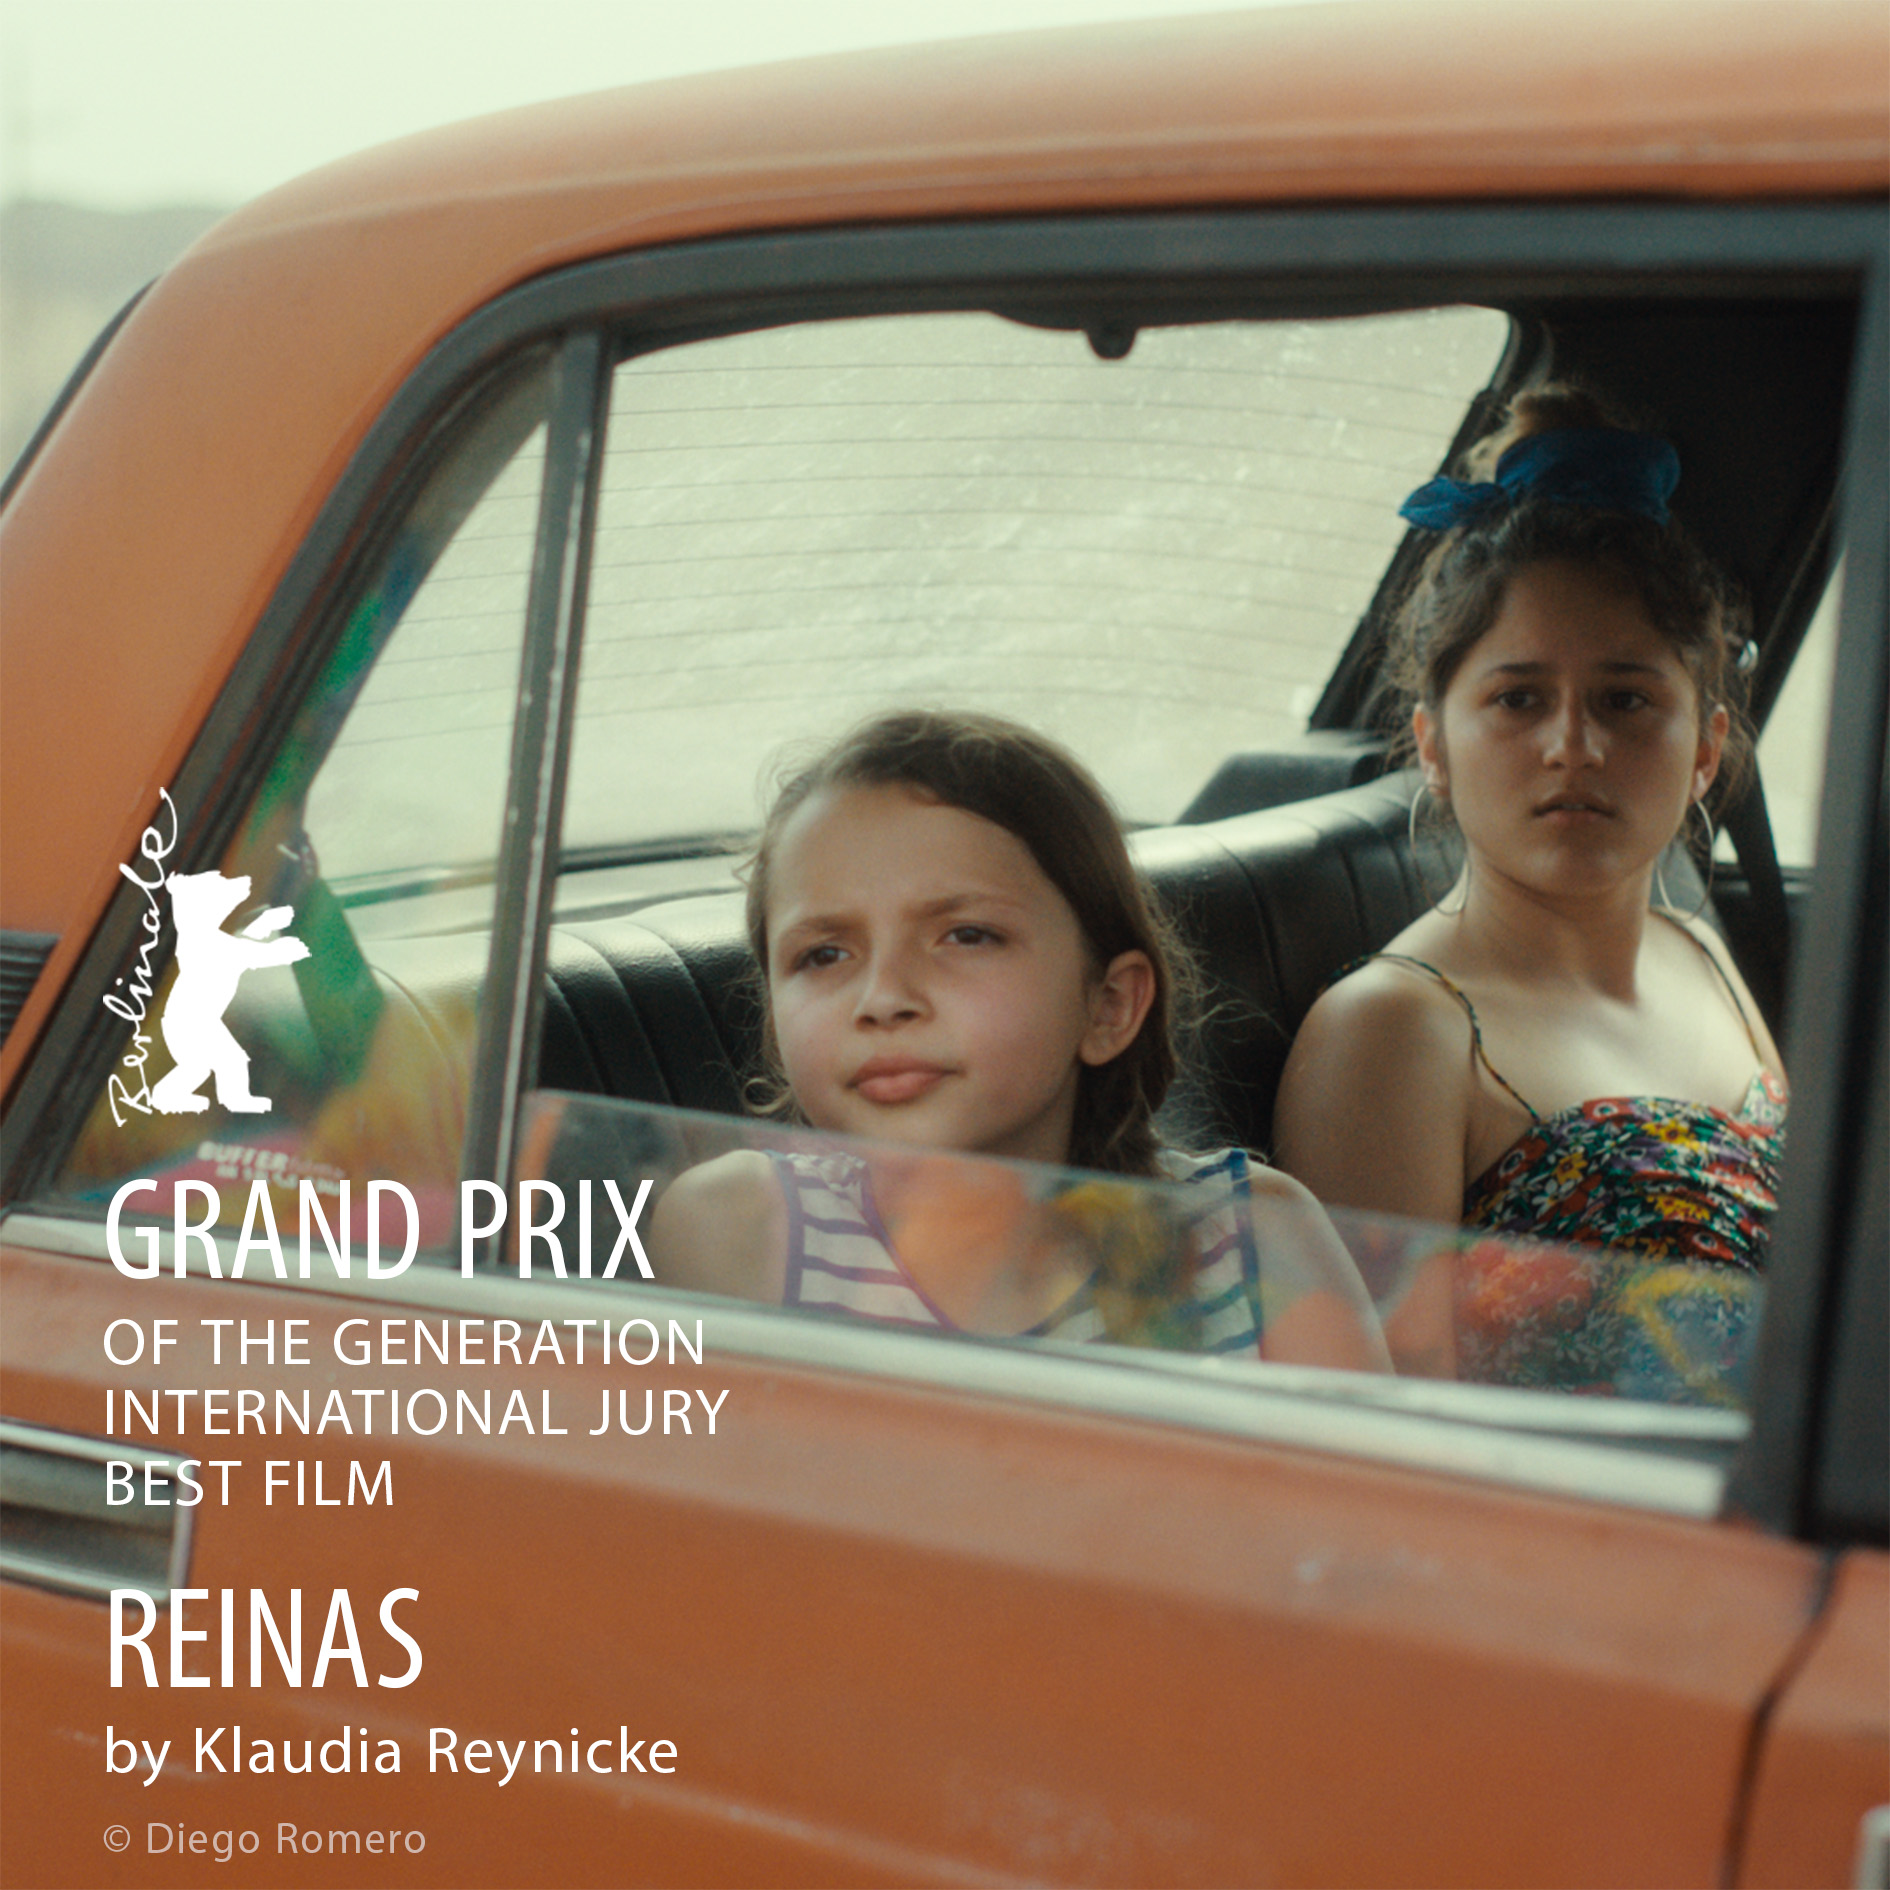 The Grand Prix of the Generation Kplus International Jury for the Best Film: “Reinas” by Klaudia Reynicke, Switzerland / Spain / Peru 